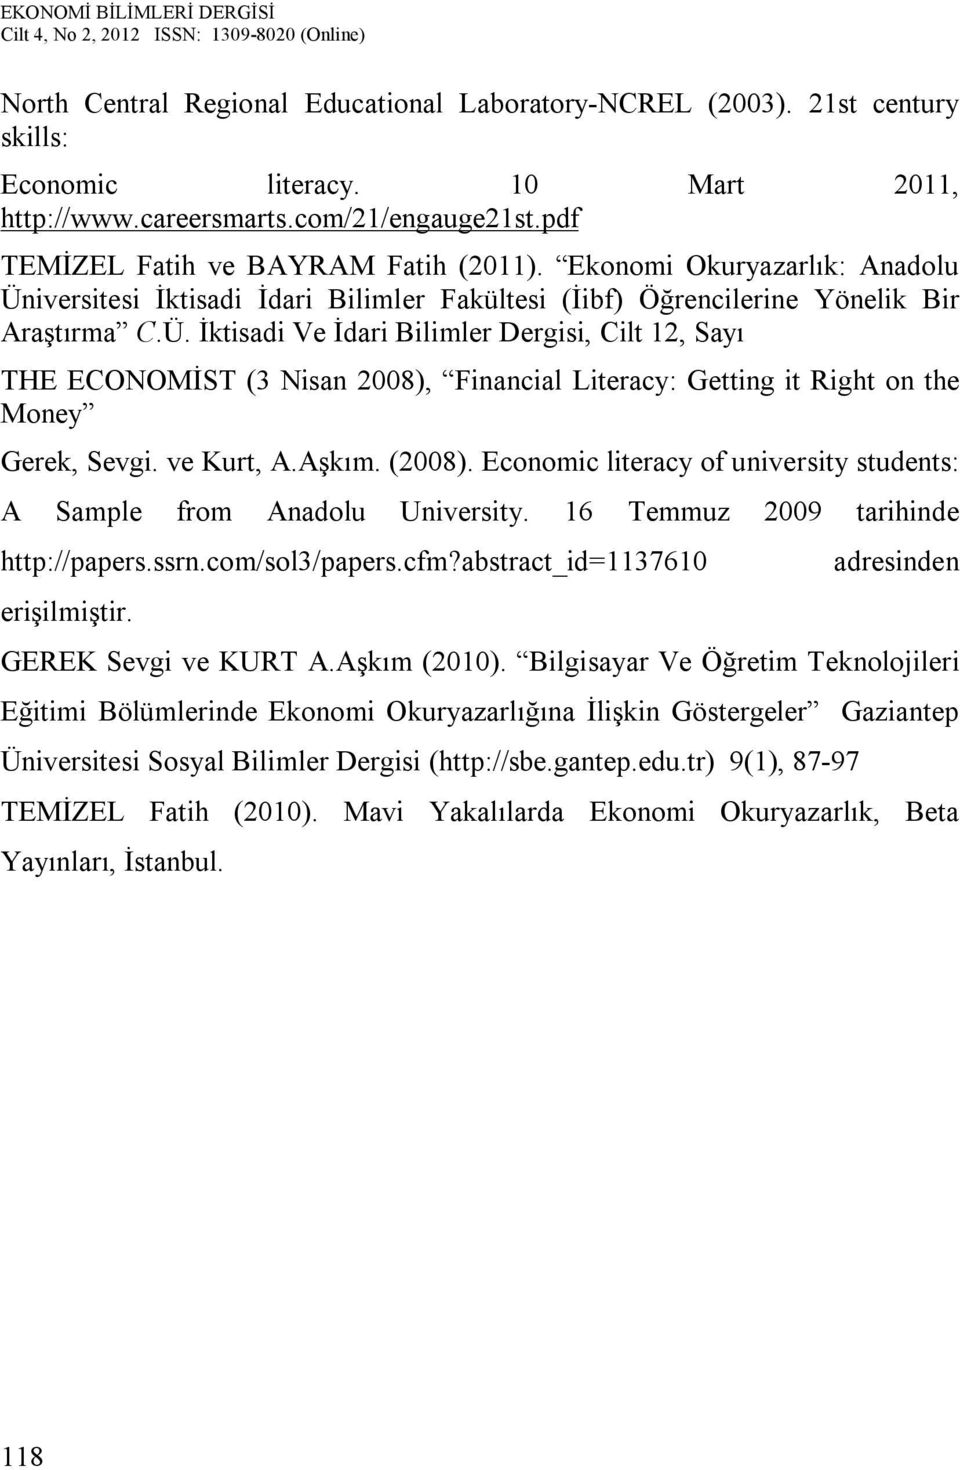 ve Kurt, A.Aşkım. (2008). Economic literacy of university students: A Sample from Anadolu University. 16 Temmuz 2009 tarihinde http://papers.ssrn.com/sol3/papers.cfm?abstract_id=113610 erişilmiştir.